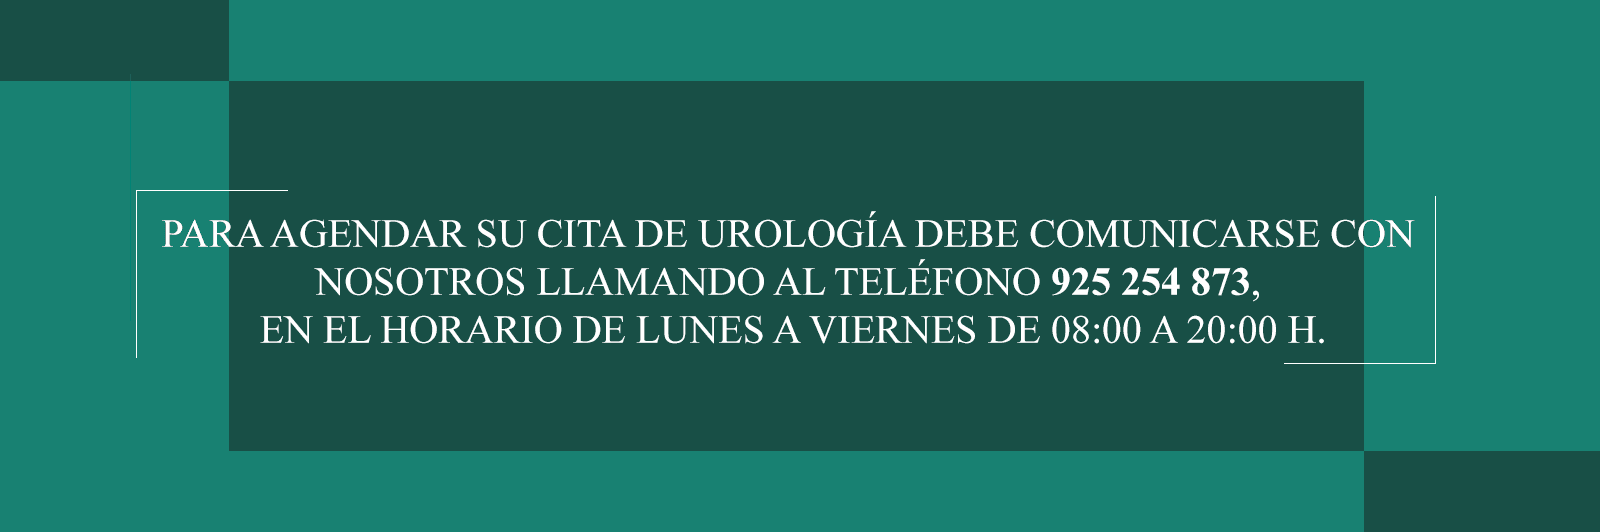 Urología Dr. Melchor y Dr. Iglesias fondo